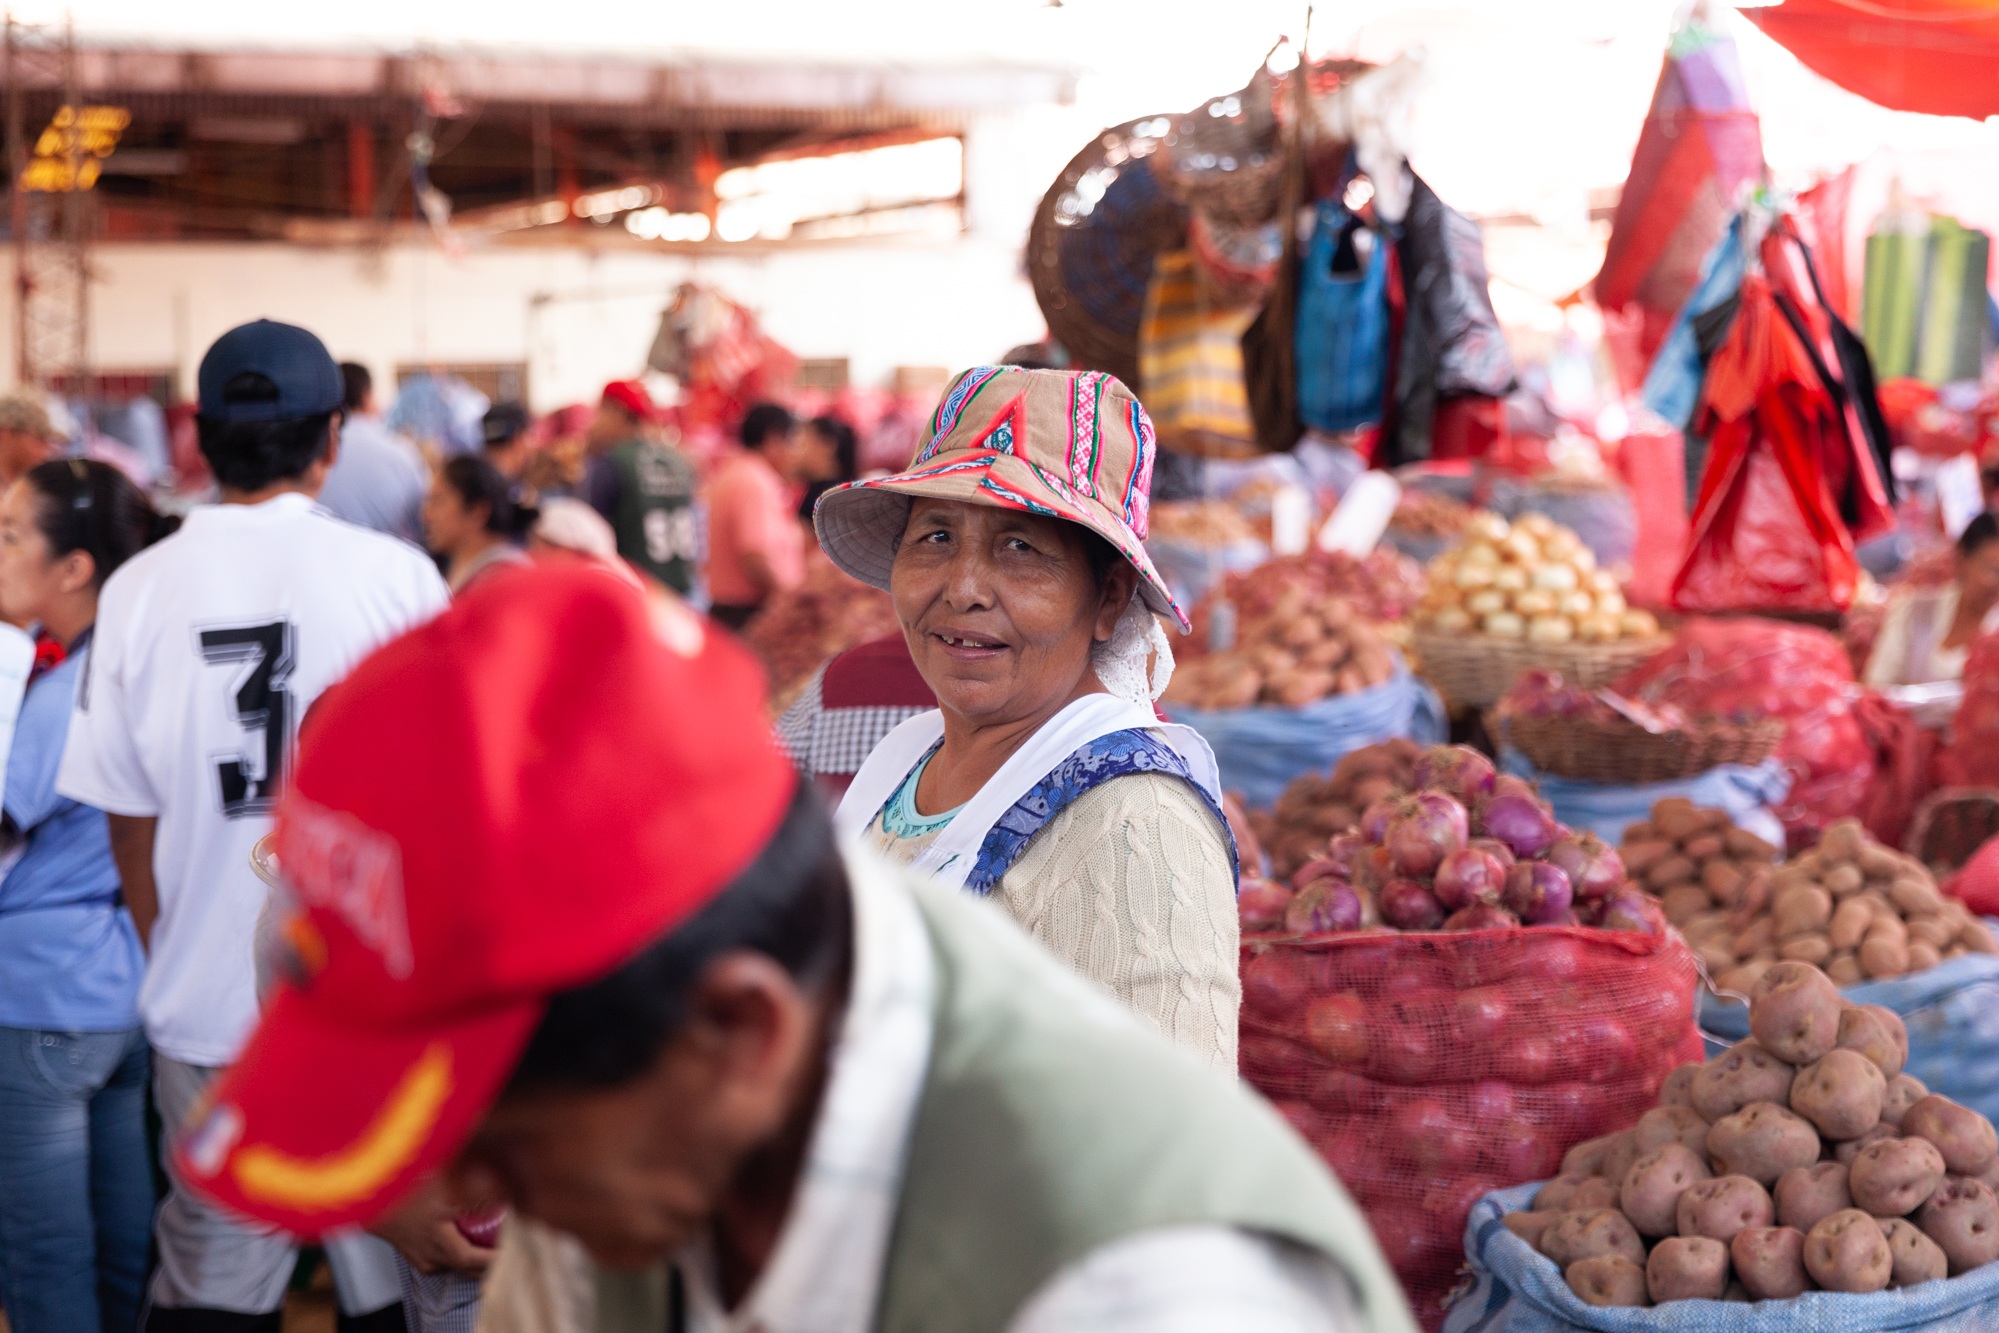  Jimena Peck Denver Lifestyle Editorial Photographer Bolivia Market Potatoes